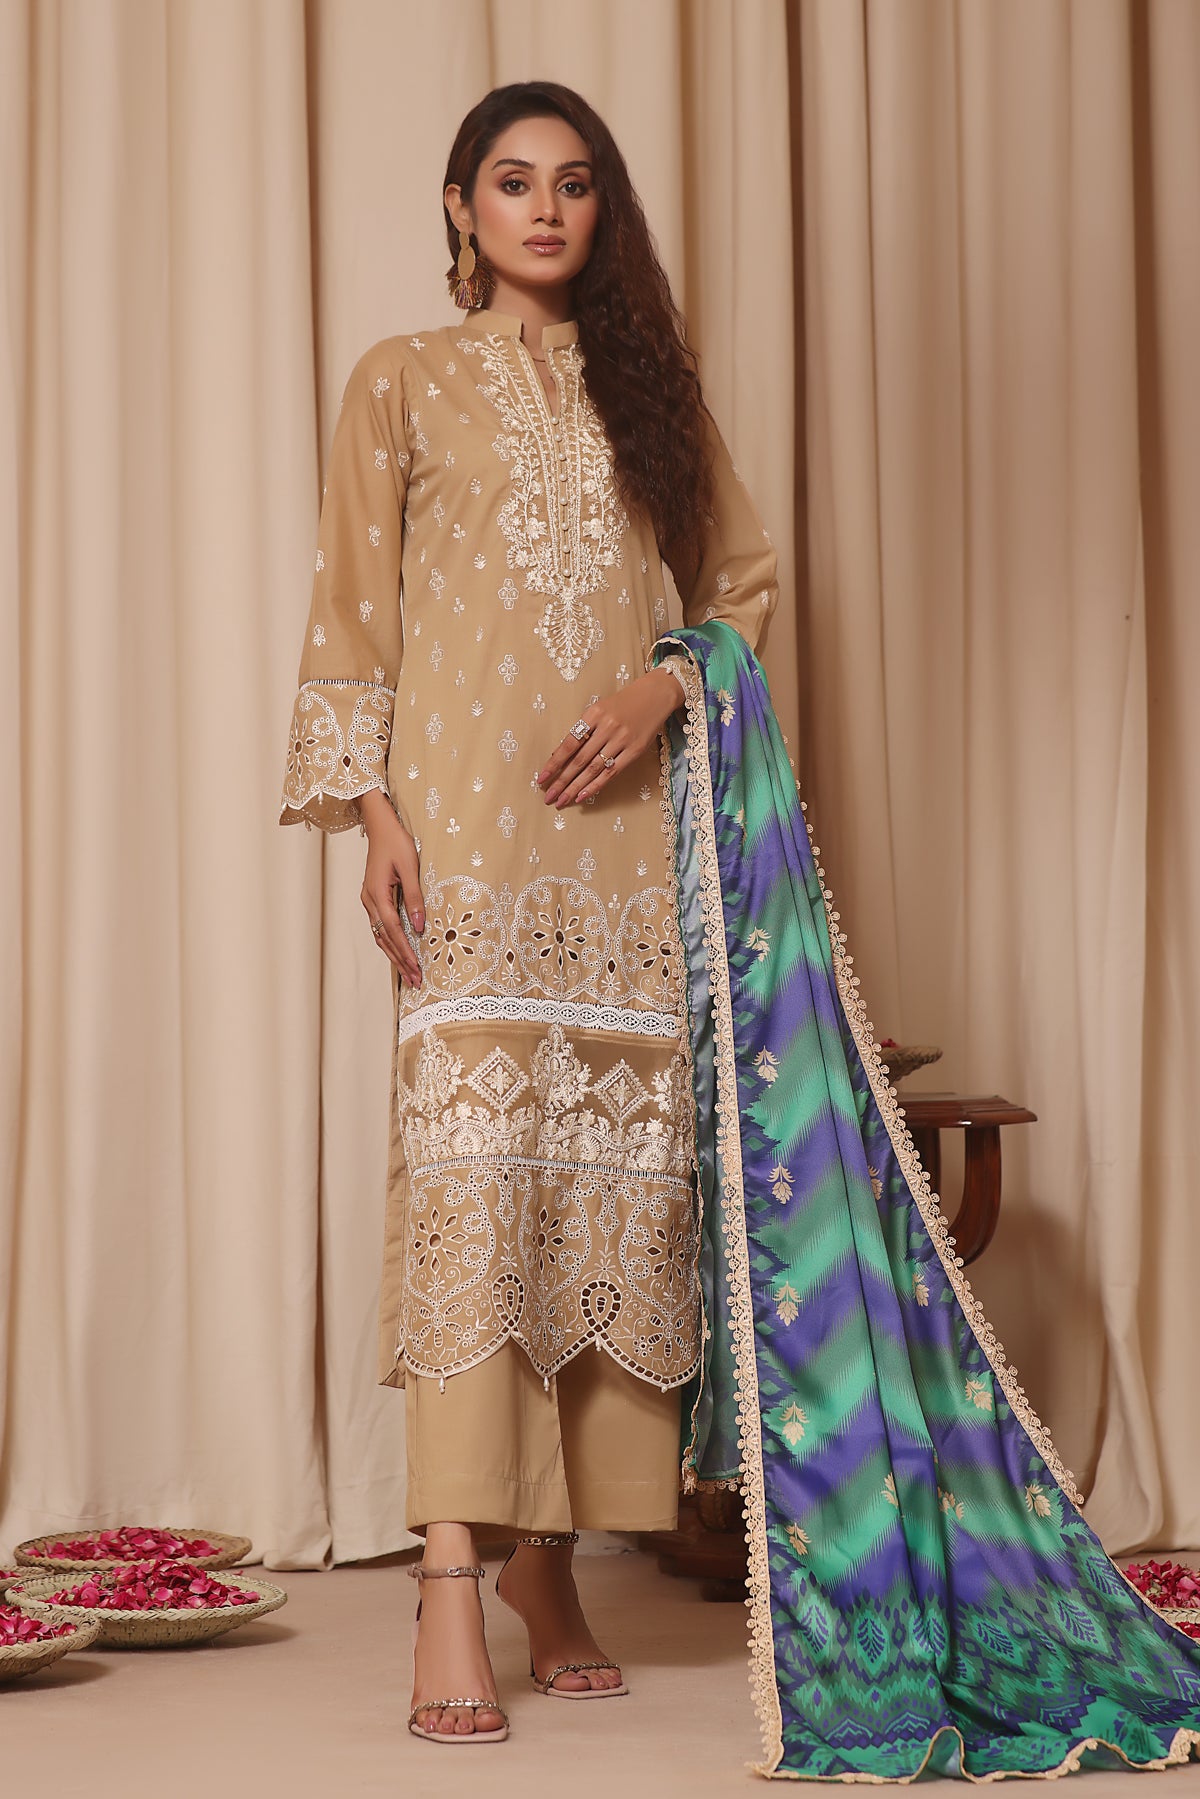 Deedag 3 Piece Suit - Zainab Chottani